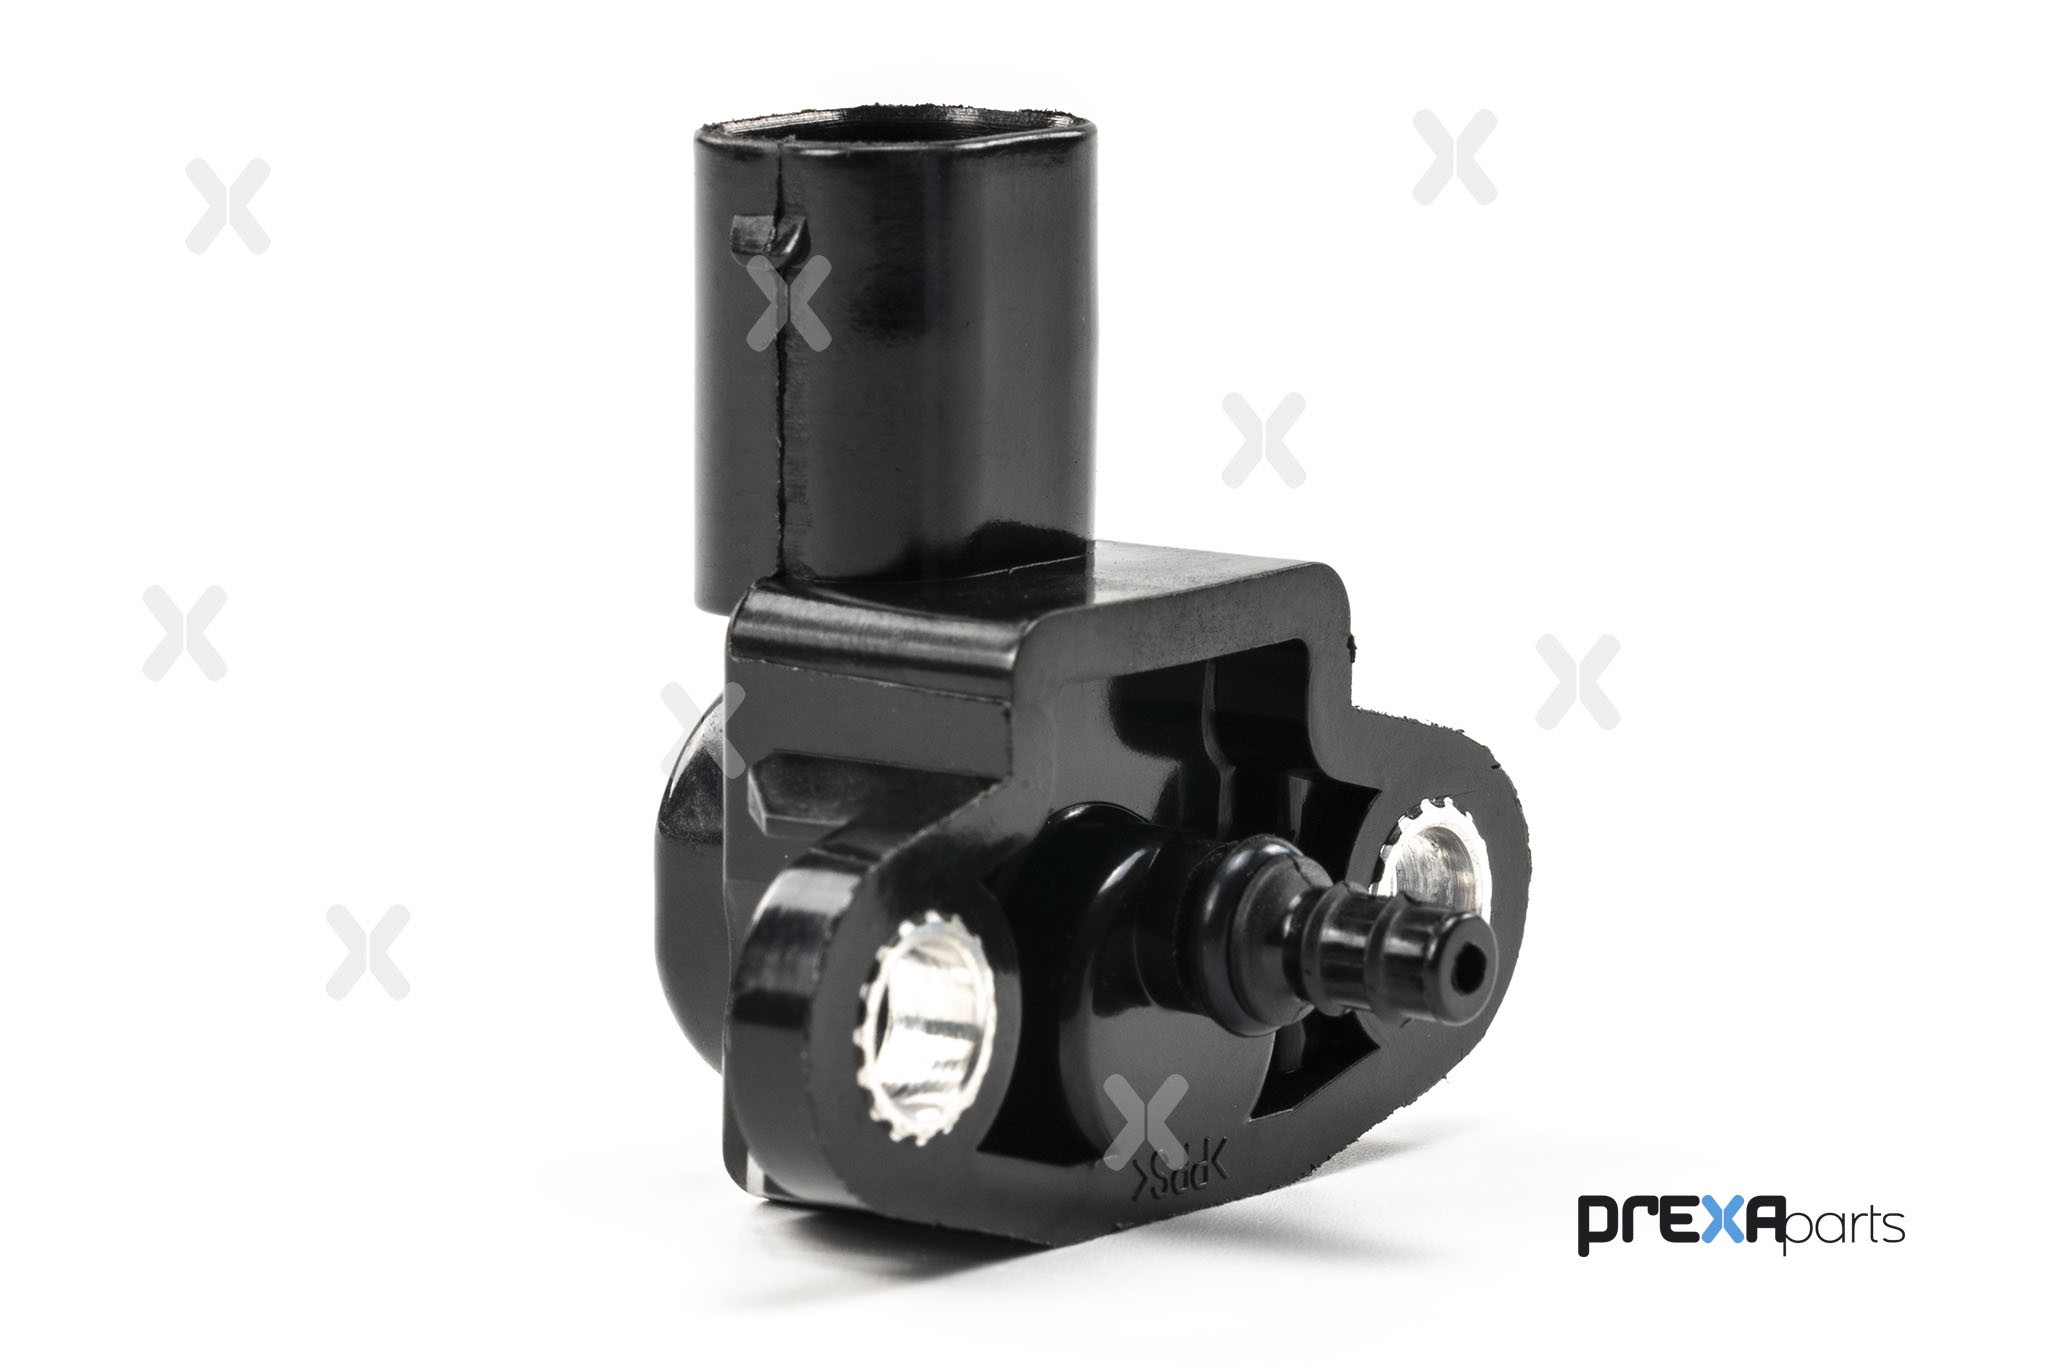 P150215 Manifold pressure sensor PREXAparts P150215 review and test